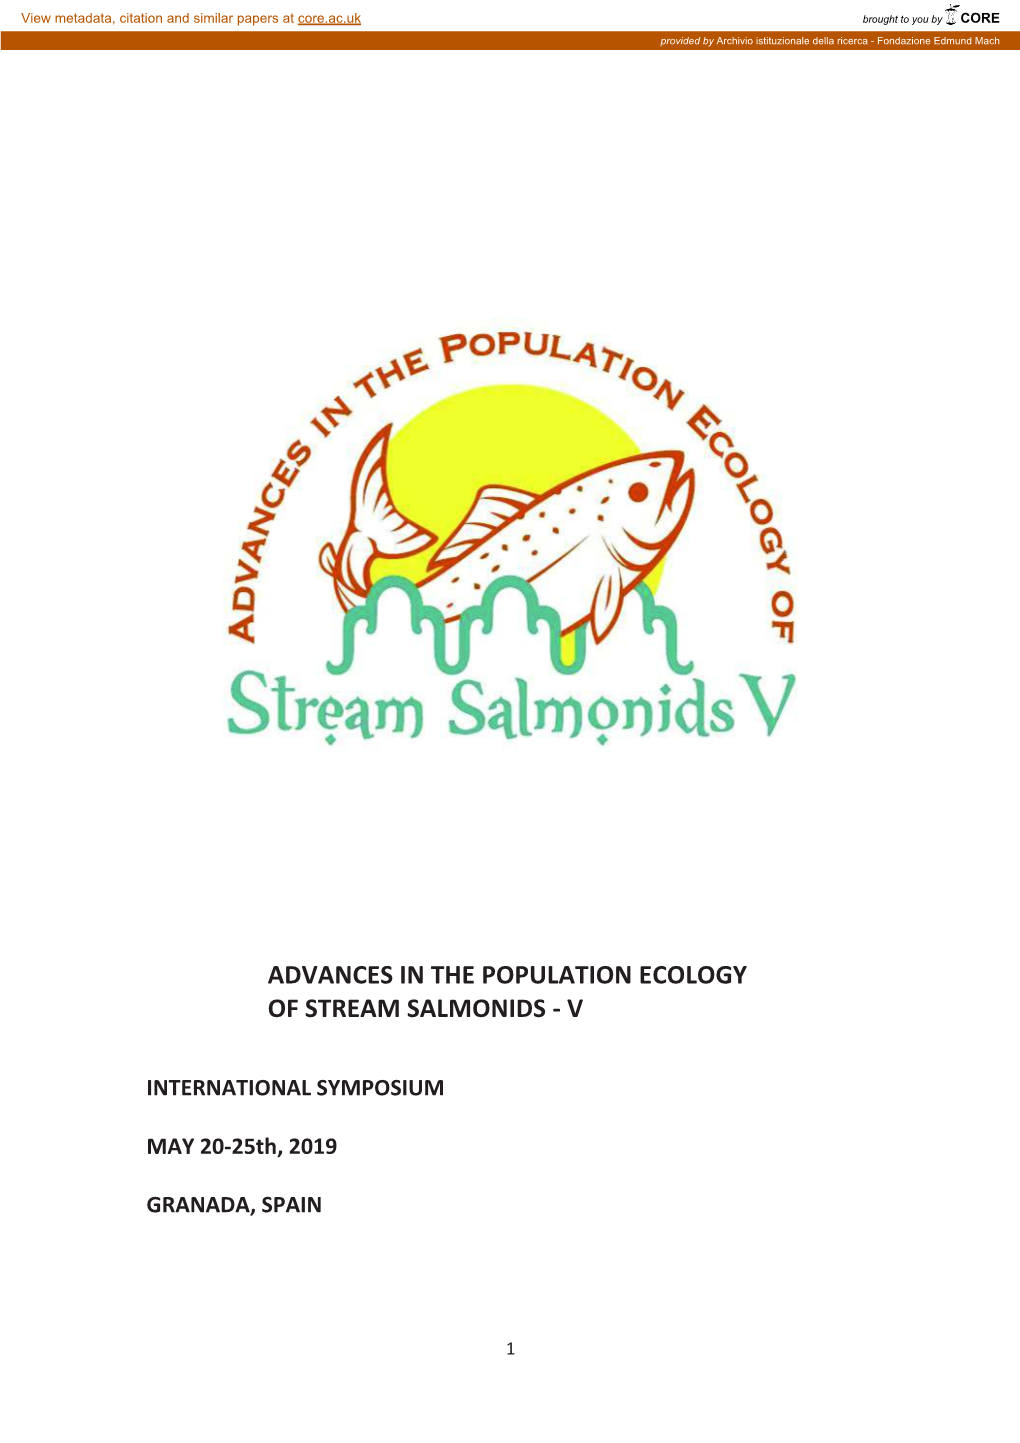 Advances in the Population Ecology of Stream Salmonids - V